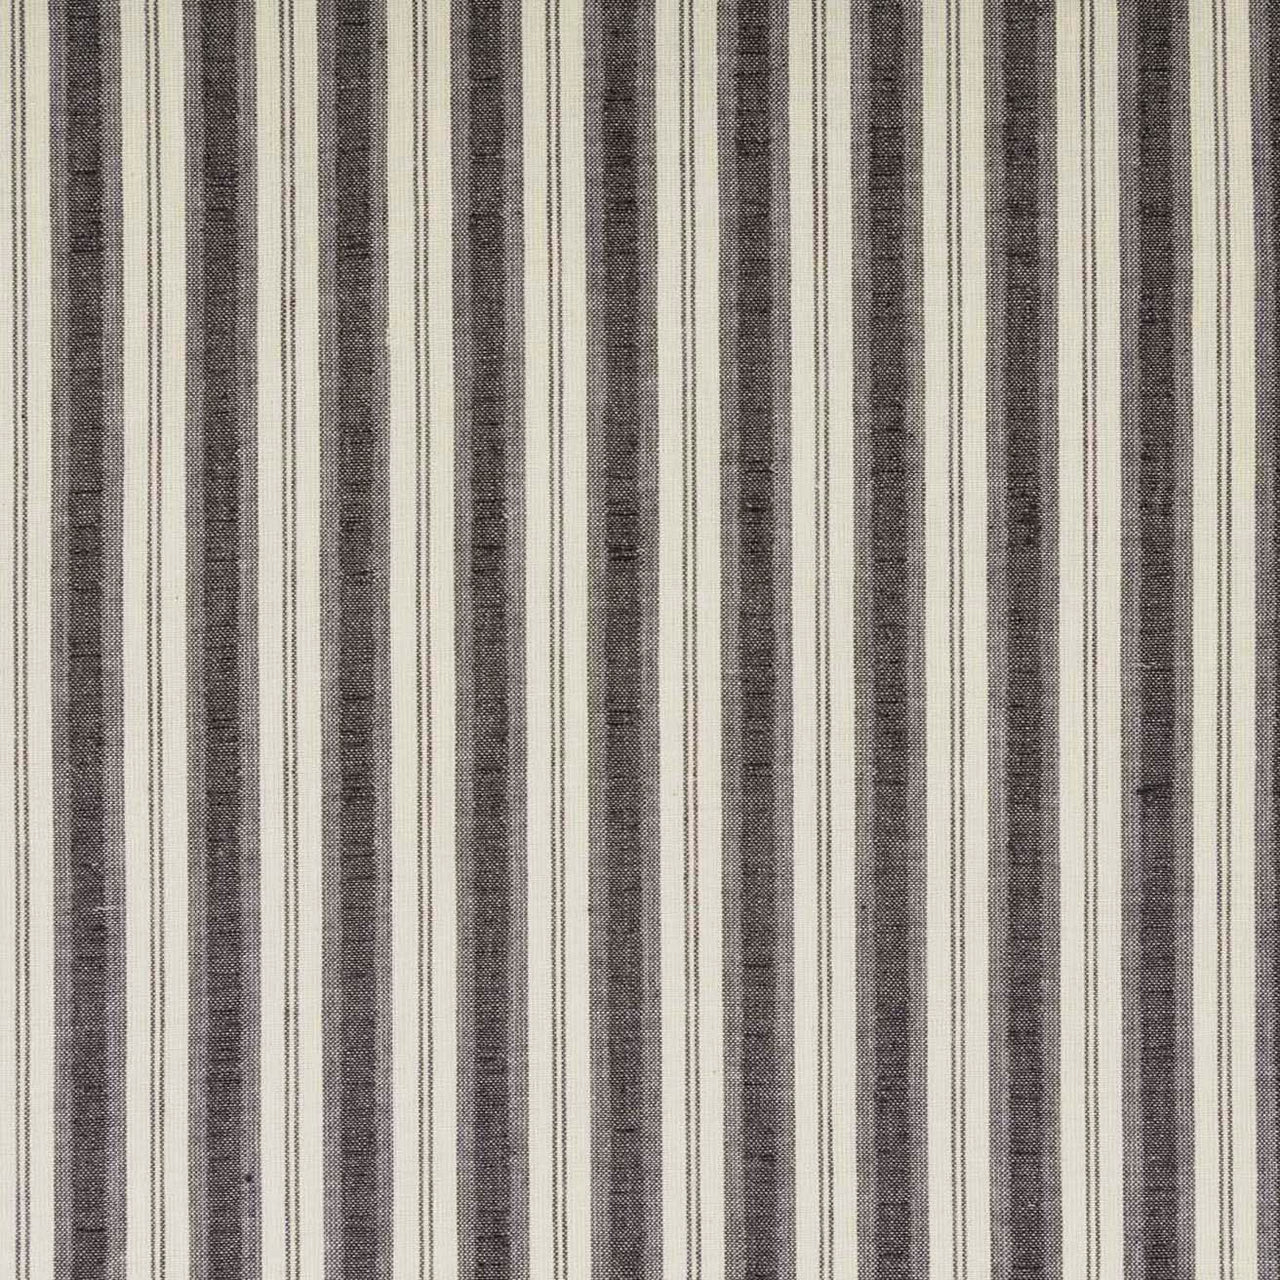 Ashmont Ticking Stripe Prairie Long Panel Set of 2 84x36x18 VHC Brands